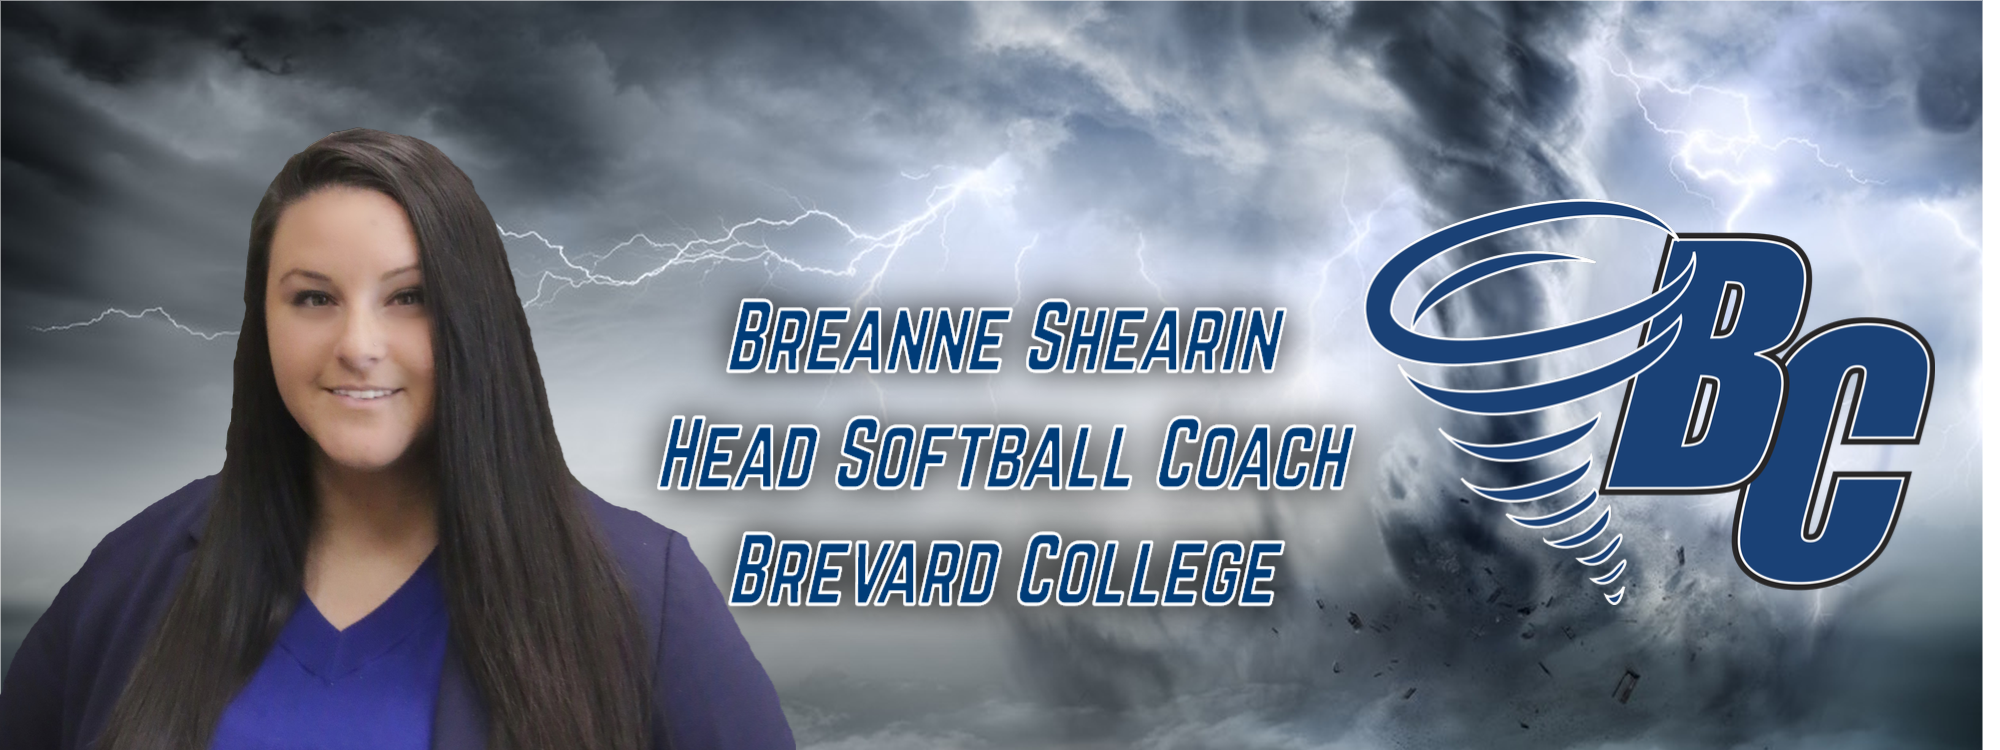 Shearin Named Head Softball Coach at Brevard College